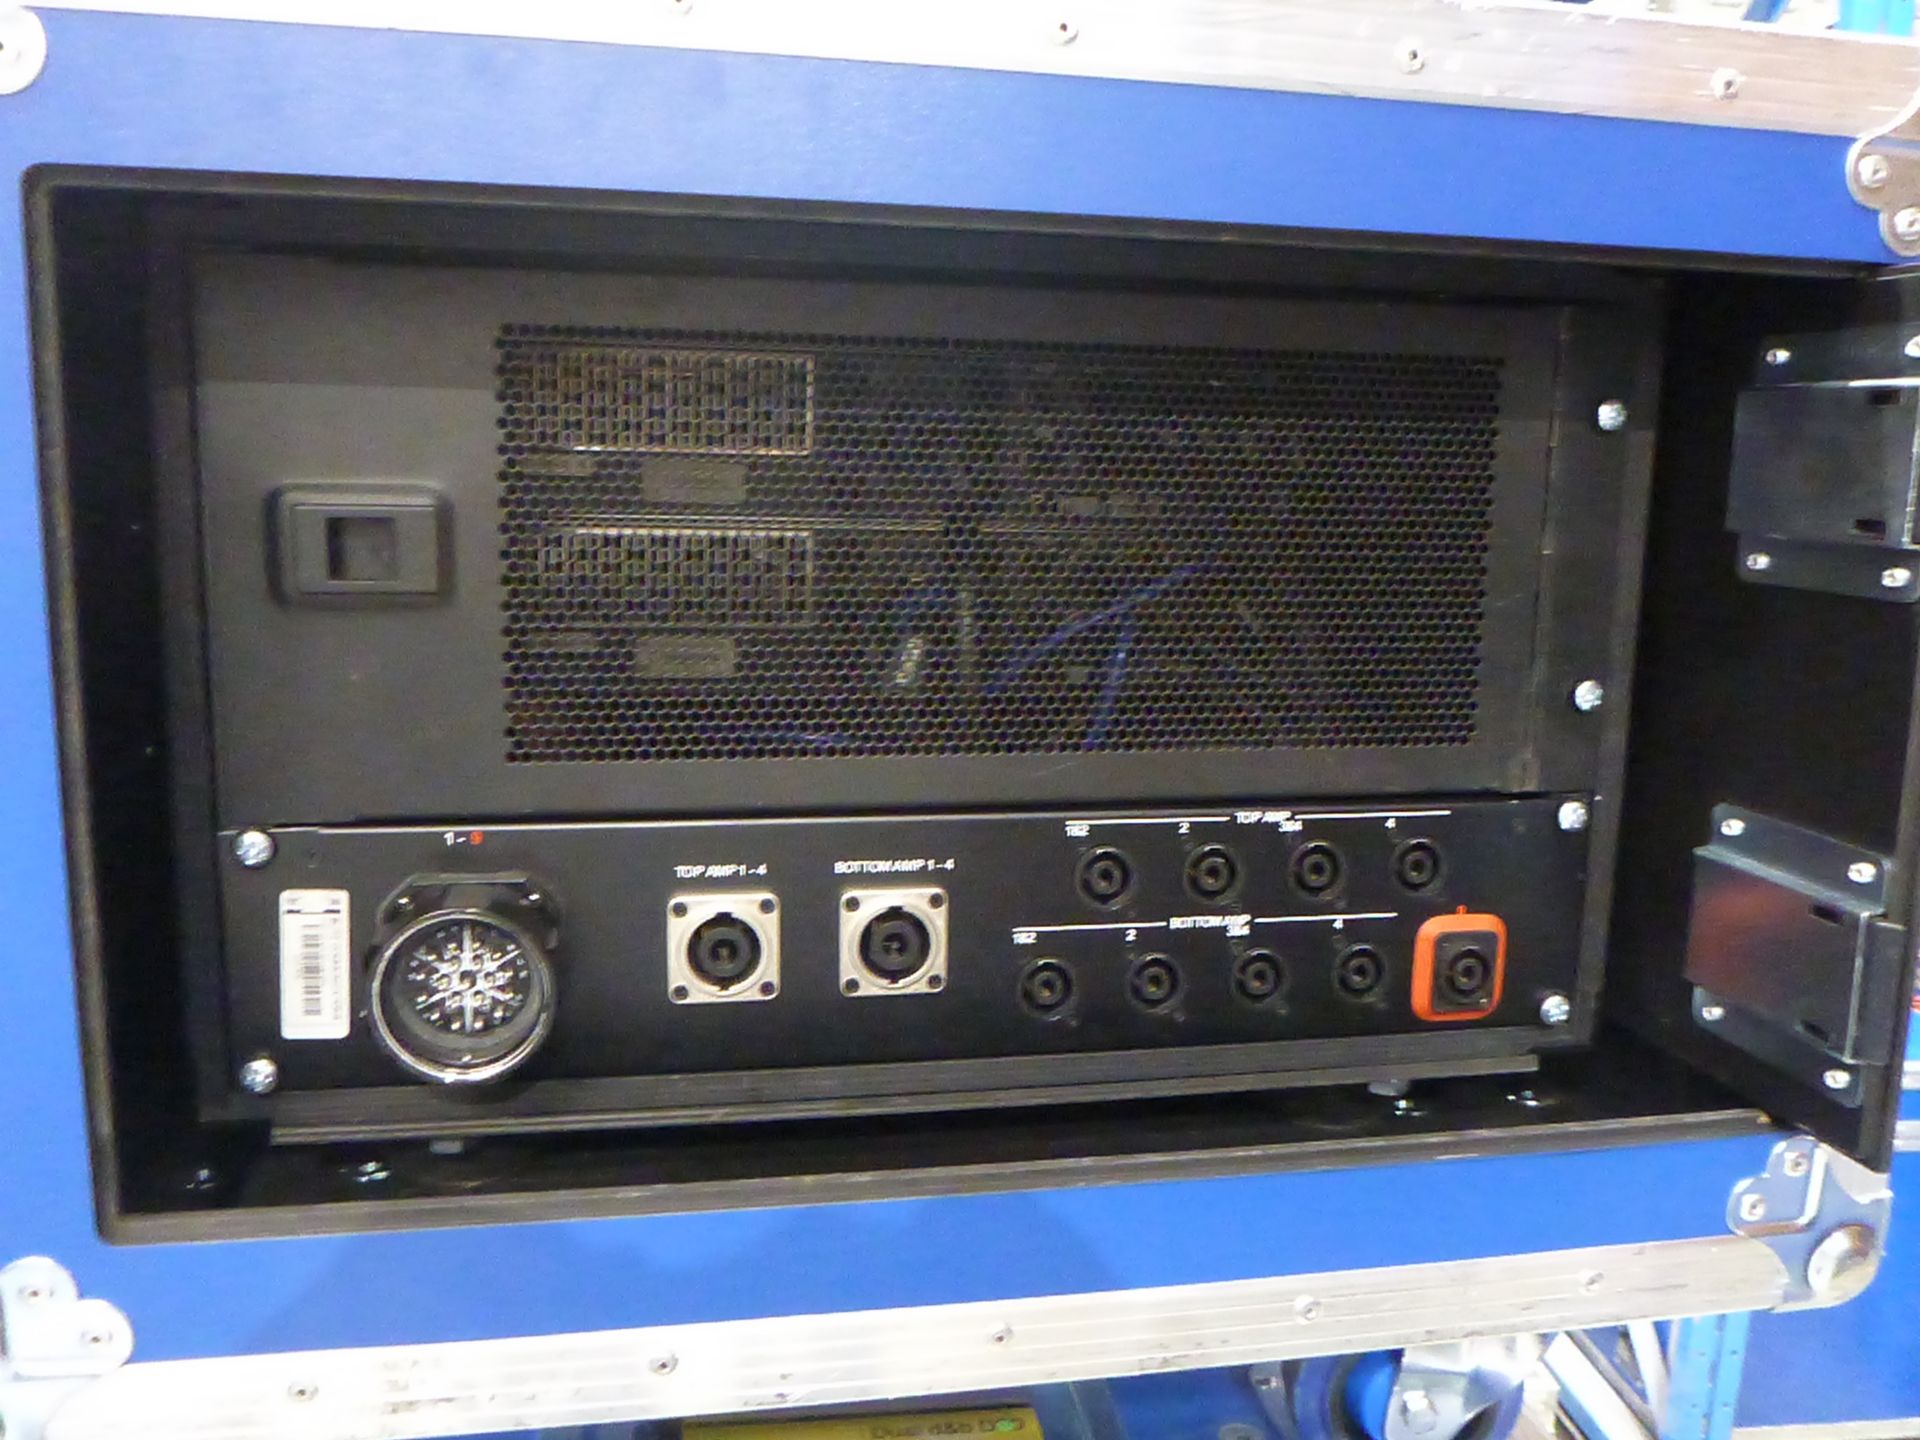 D & B Audiotecknik Dual D20 4 Chnl Power Amplifier Rack with input panel Kelsey D20 Soca, NL8 & - Image 4 of 10